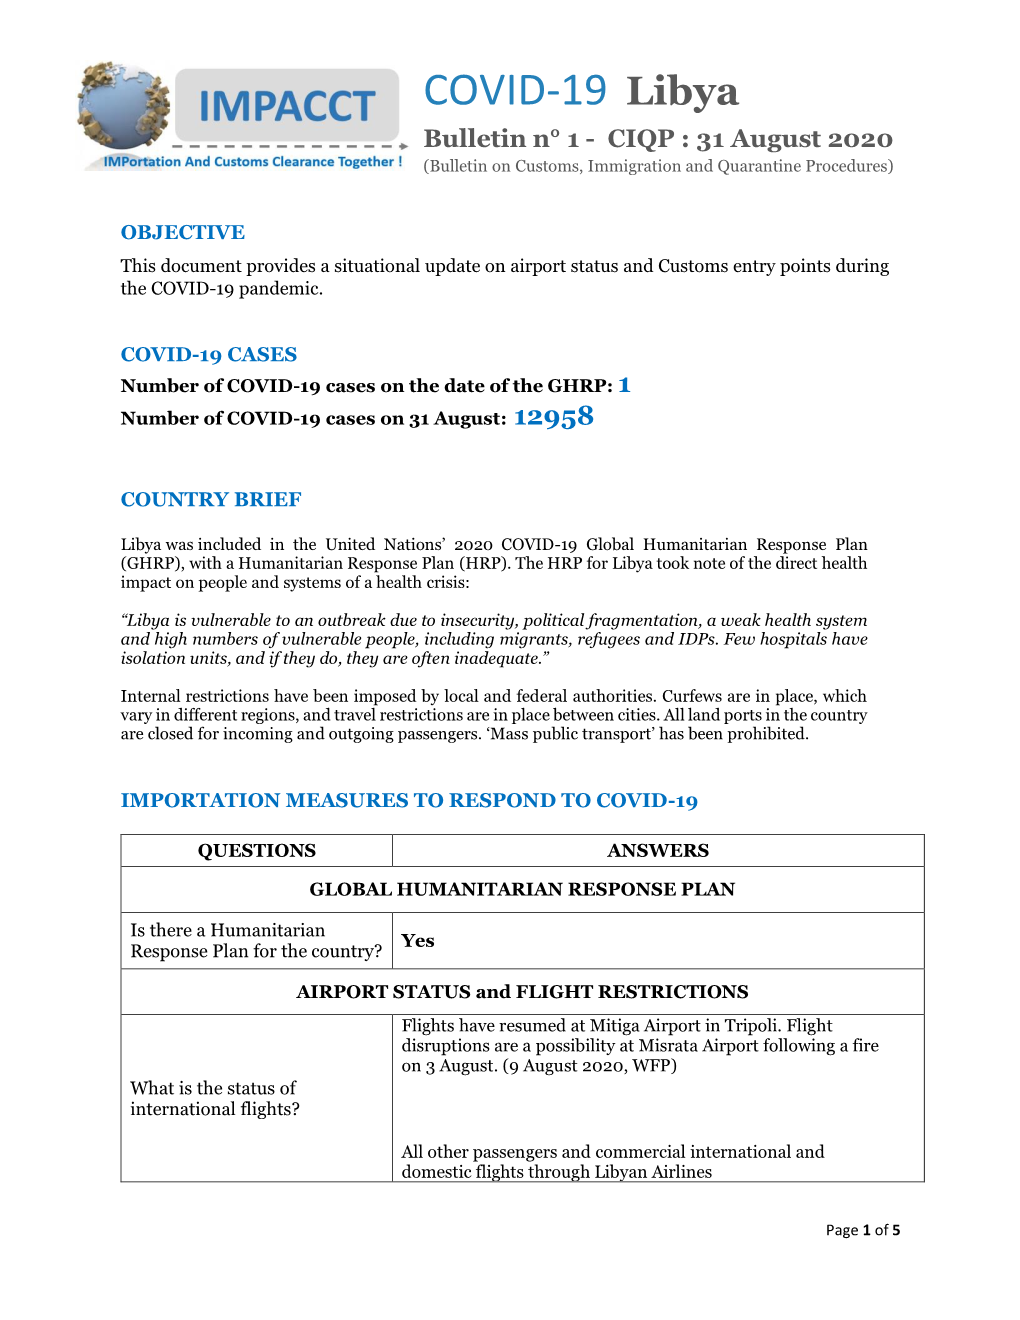 COVID-19 Libya Bulletin N° 1 - CIQP : 31 August 2020 (Bulletin on Customs, Immigration and Quarantine Procedures)